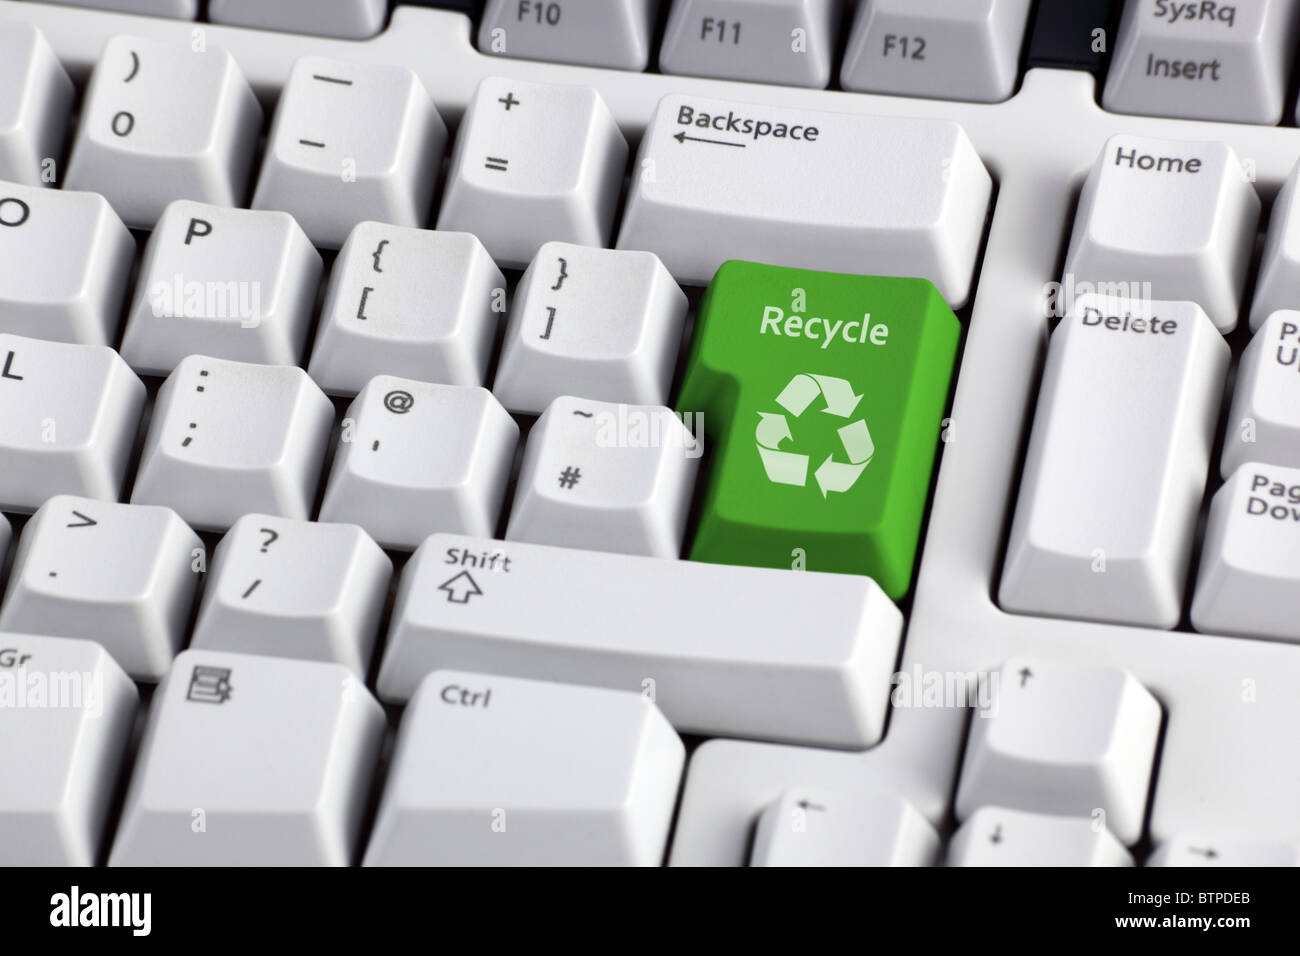 Recycling symbol on keyboard Stock Photo